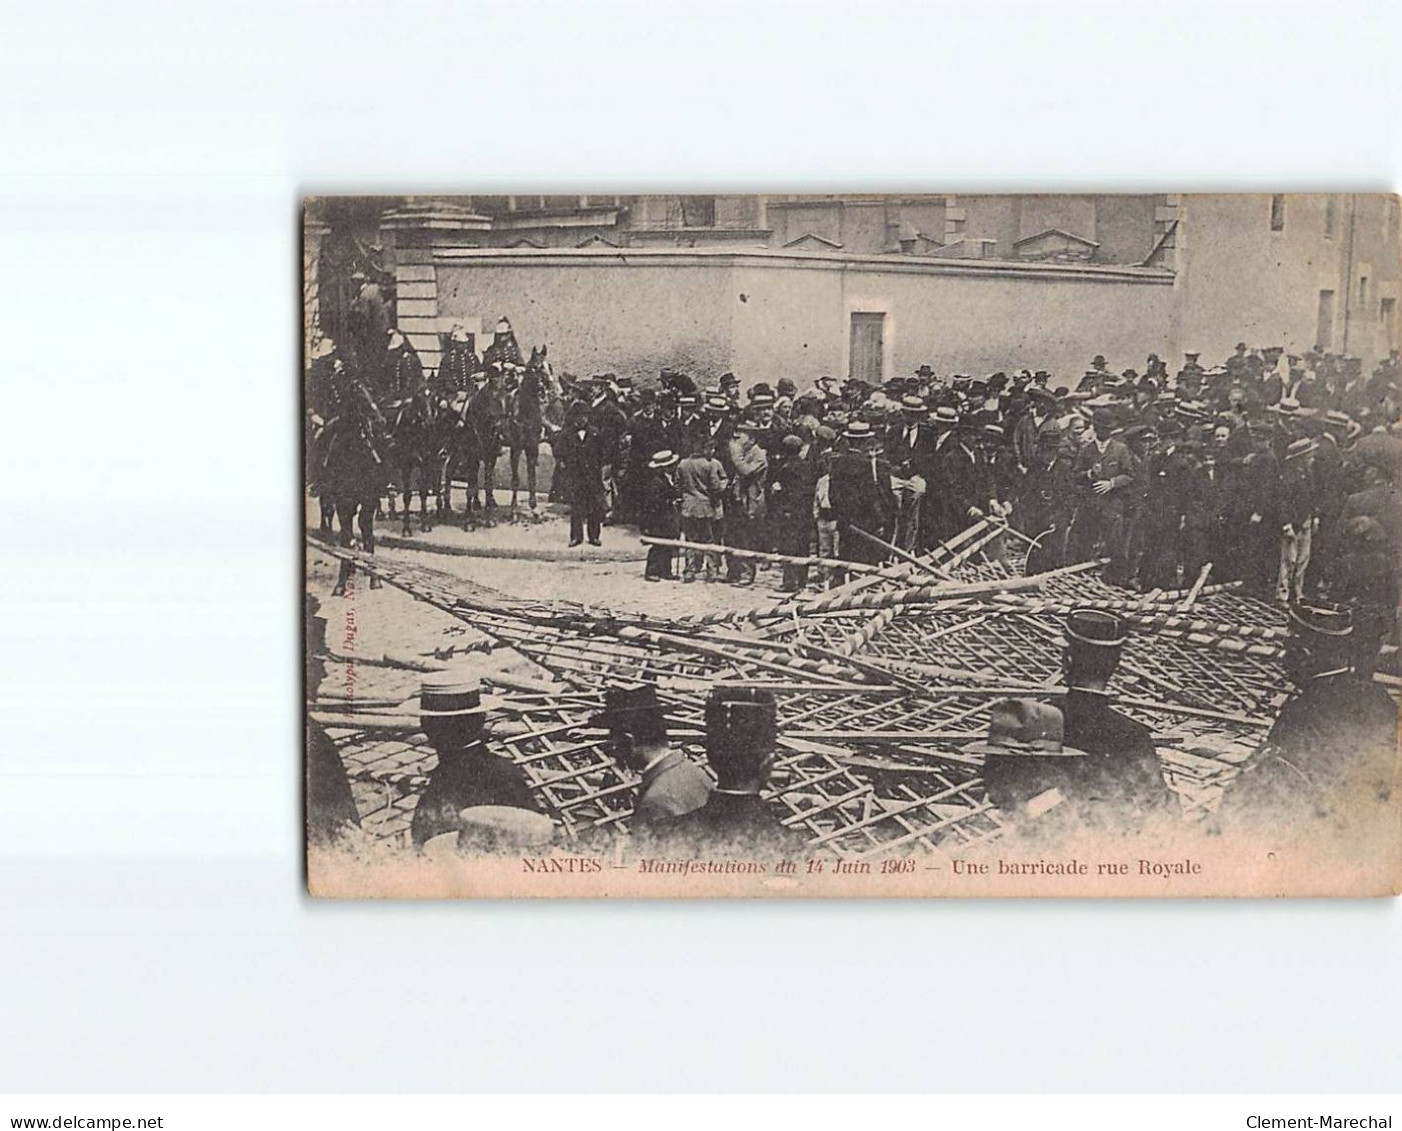 NANTES : Manifestations Du 14 Juin 1903, Une Barricade Rue Royale - état - Nantes